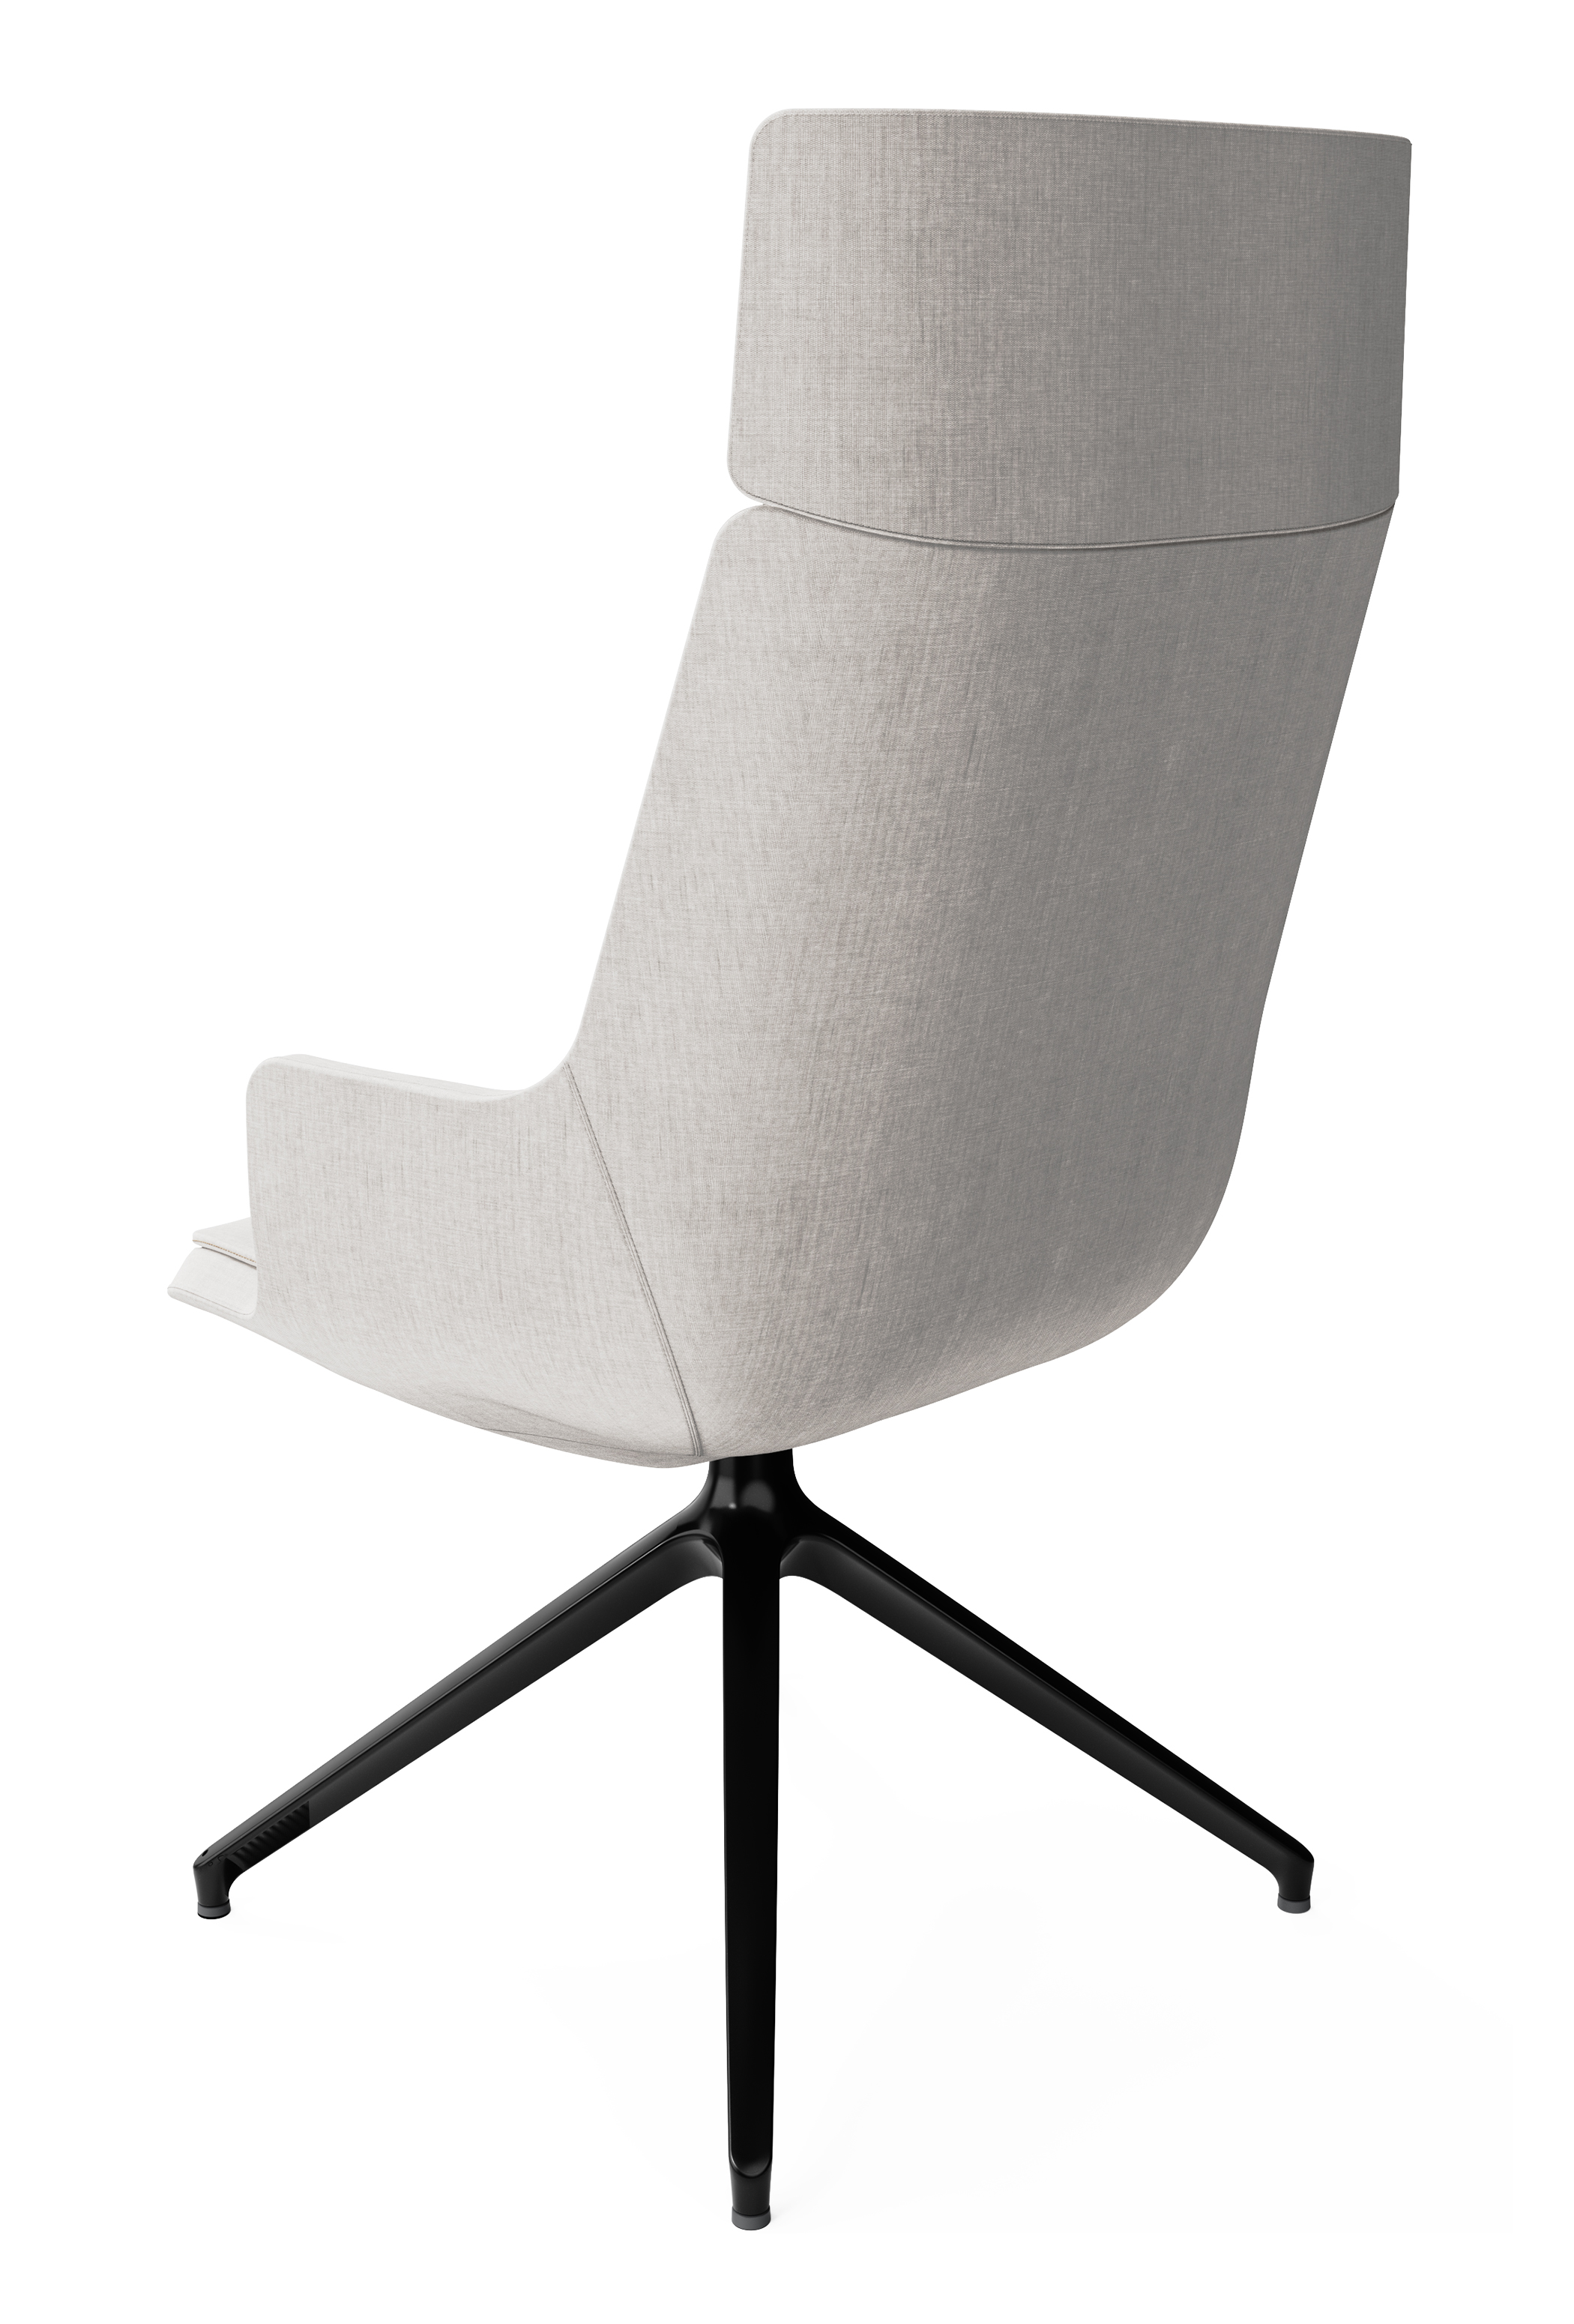 WS - Contour chair - High, 4 star pyramidal castor black base (back angle)